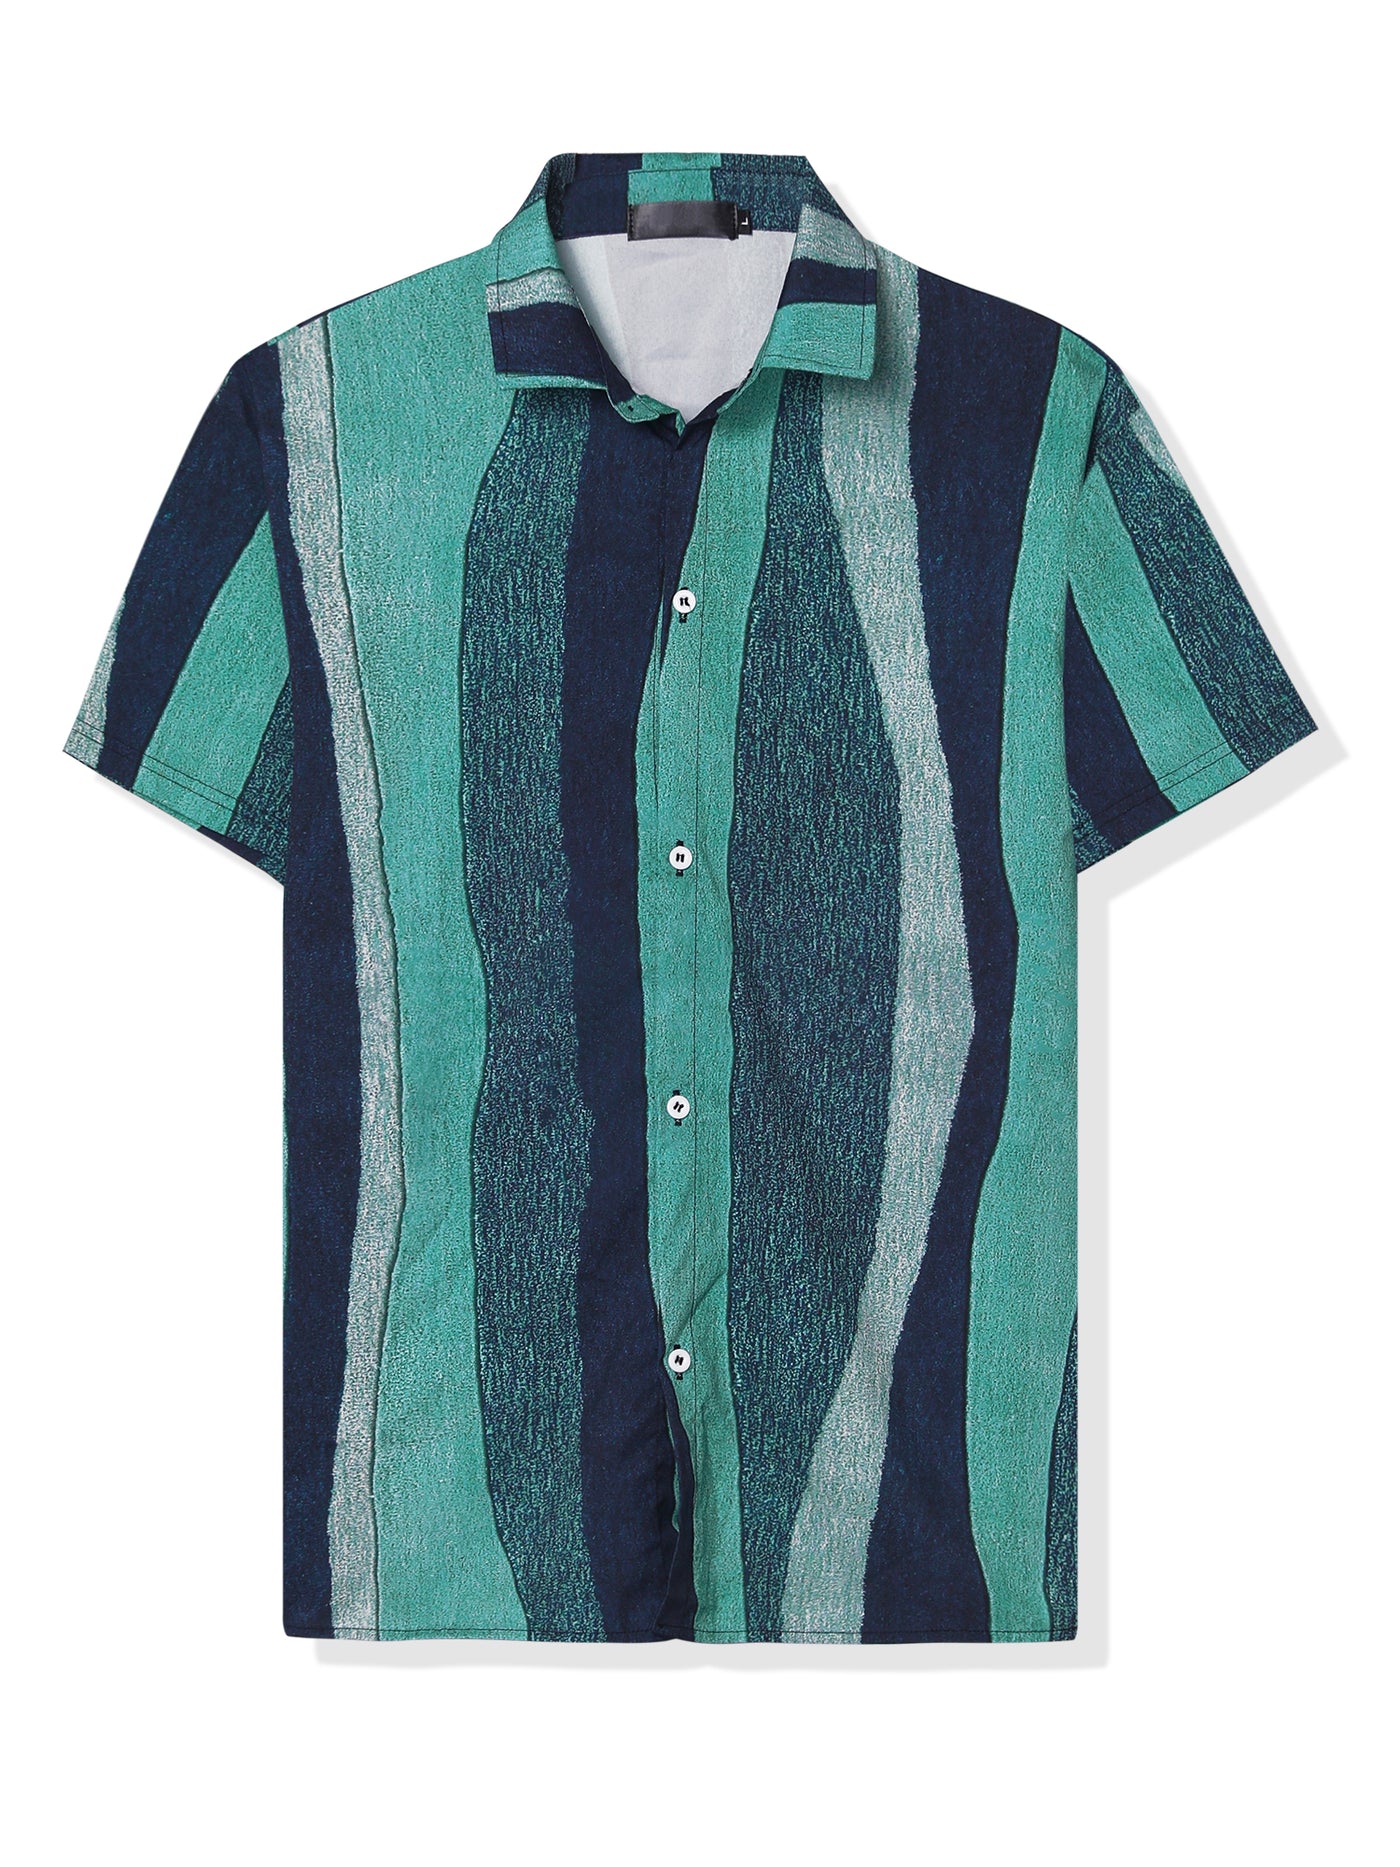 Bublédon Colorful Vertical Striped Short Sleeve Hawaiian Shirts